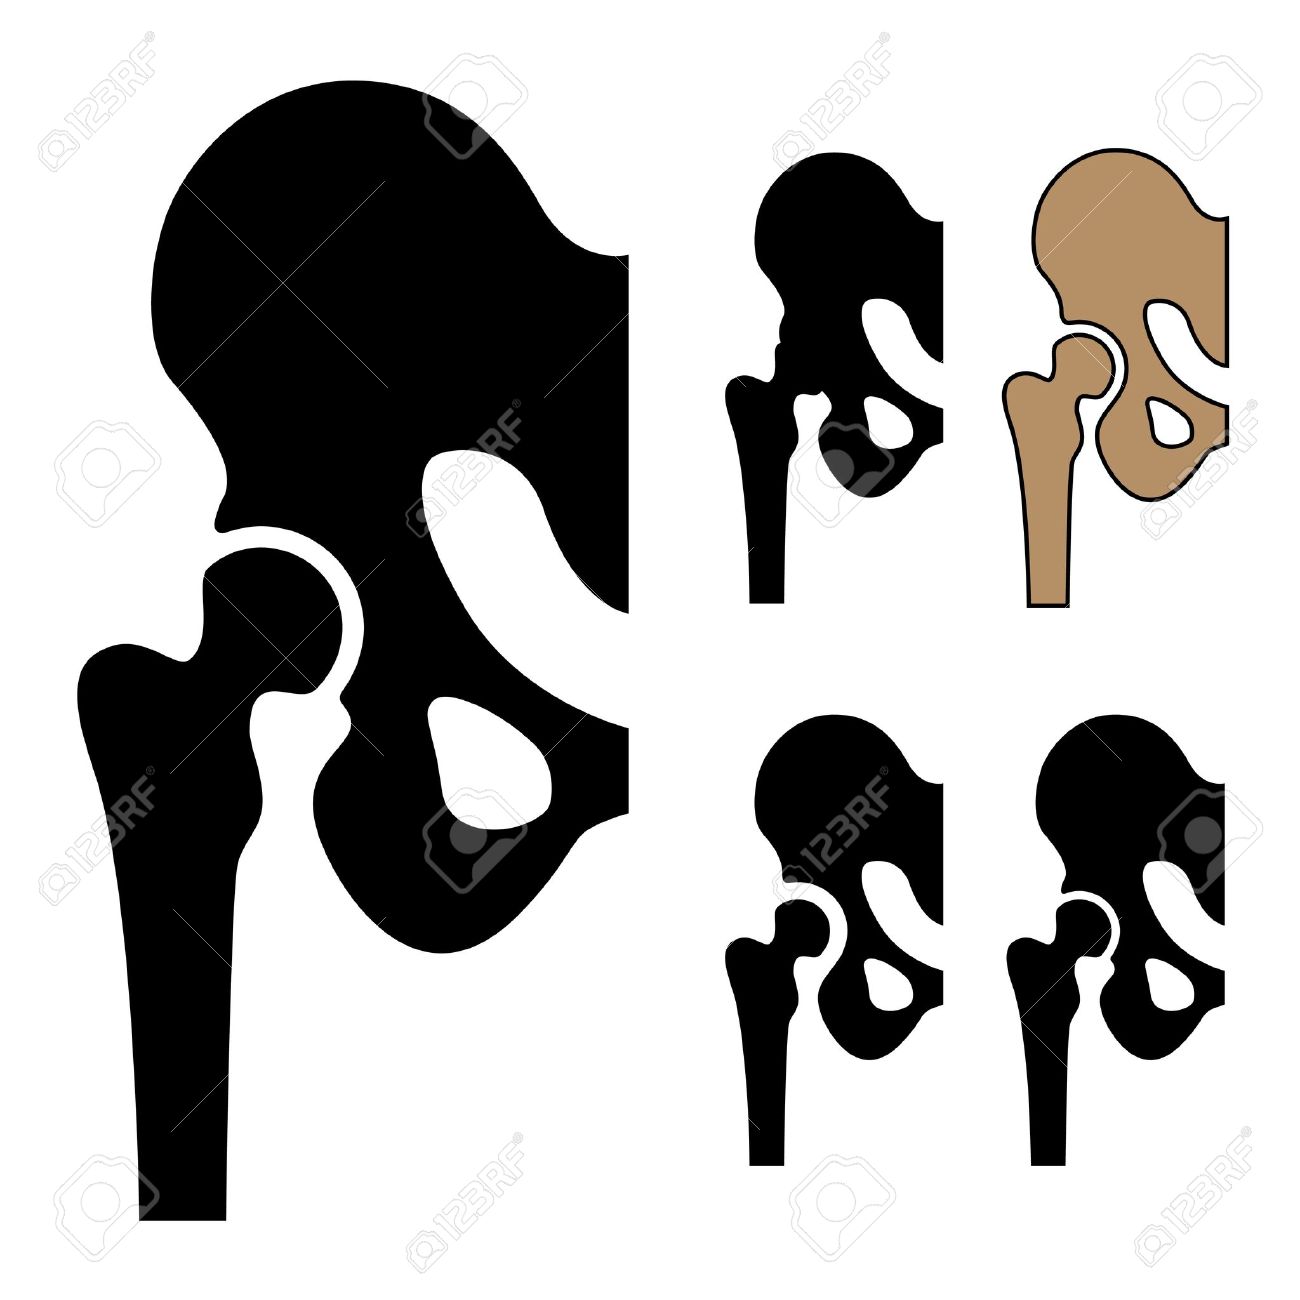 Bone clipart silhouette. At getdrawings com free